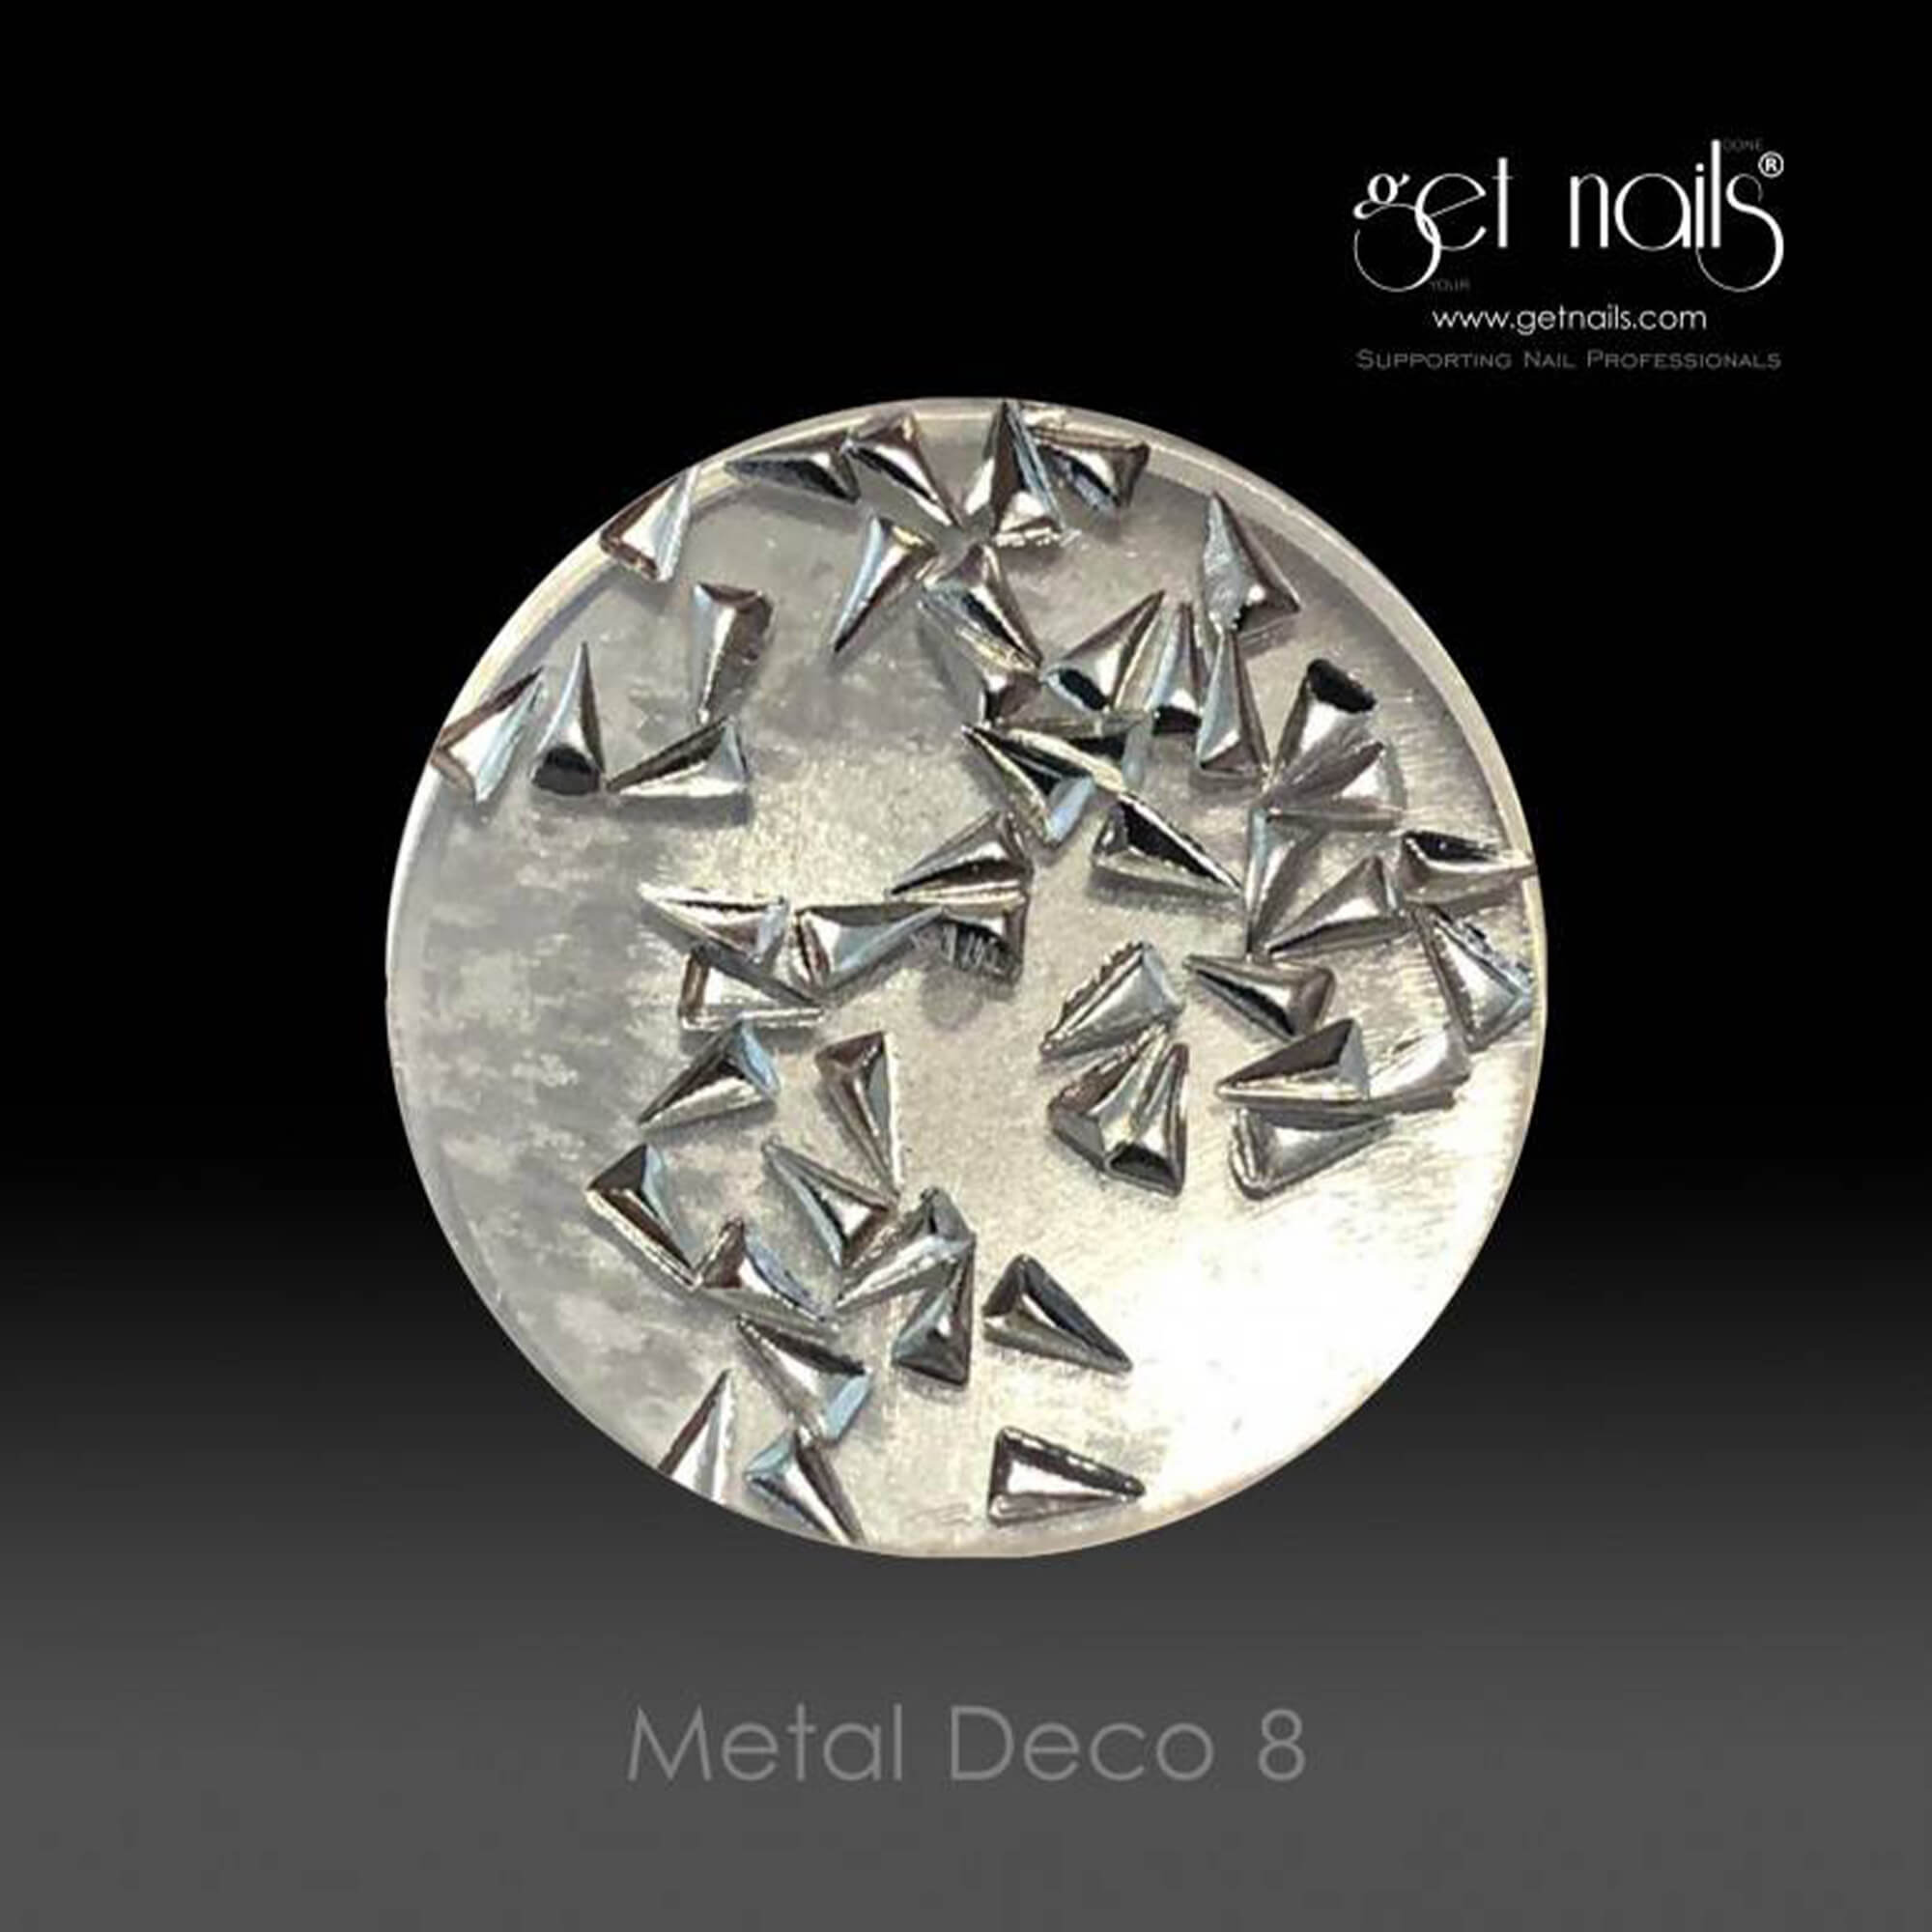 Get Nails Austria - Metal Deco 8 Silver, 50 шт.